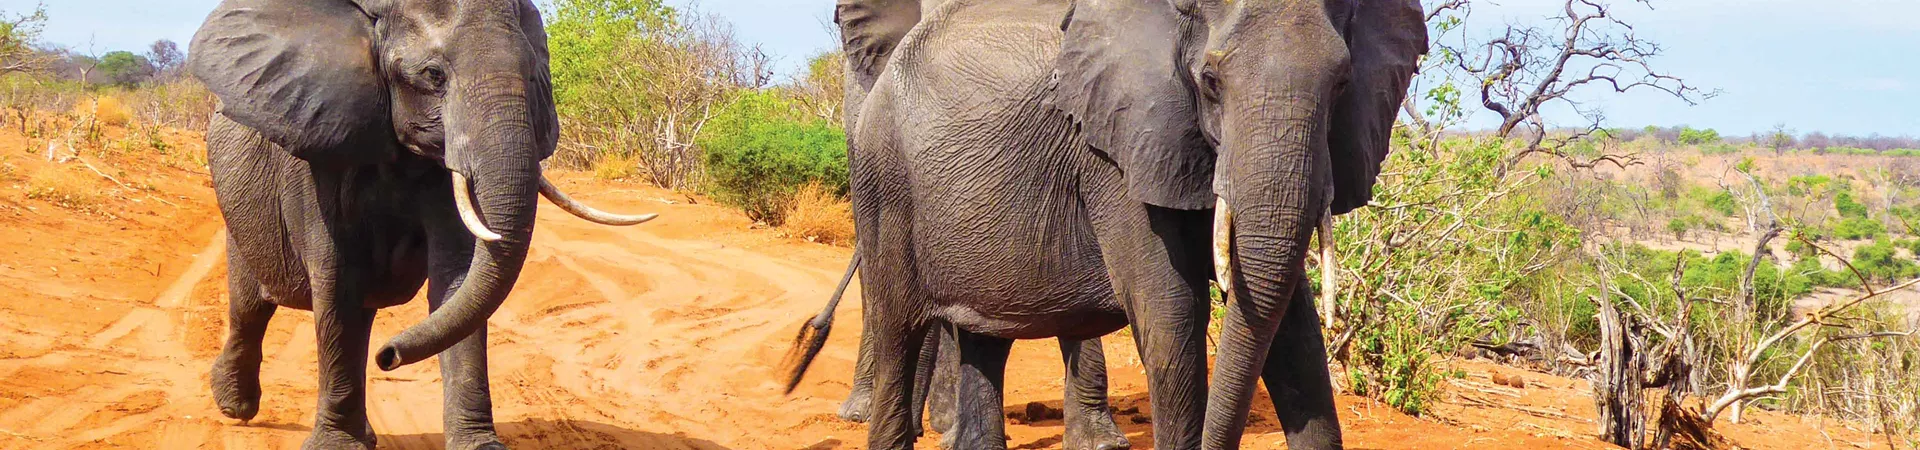 Elephants In The Wild Africa 0037AFRI2019